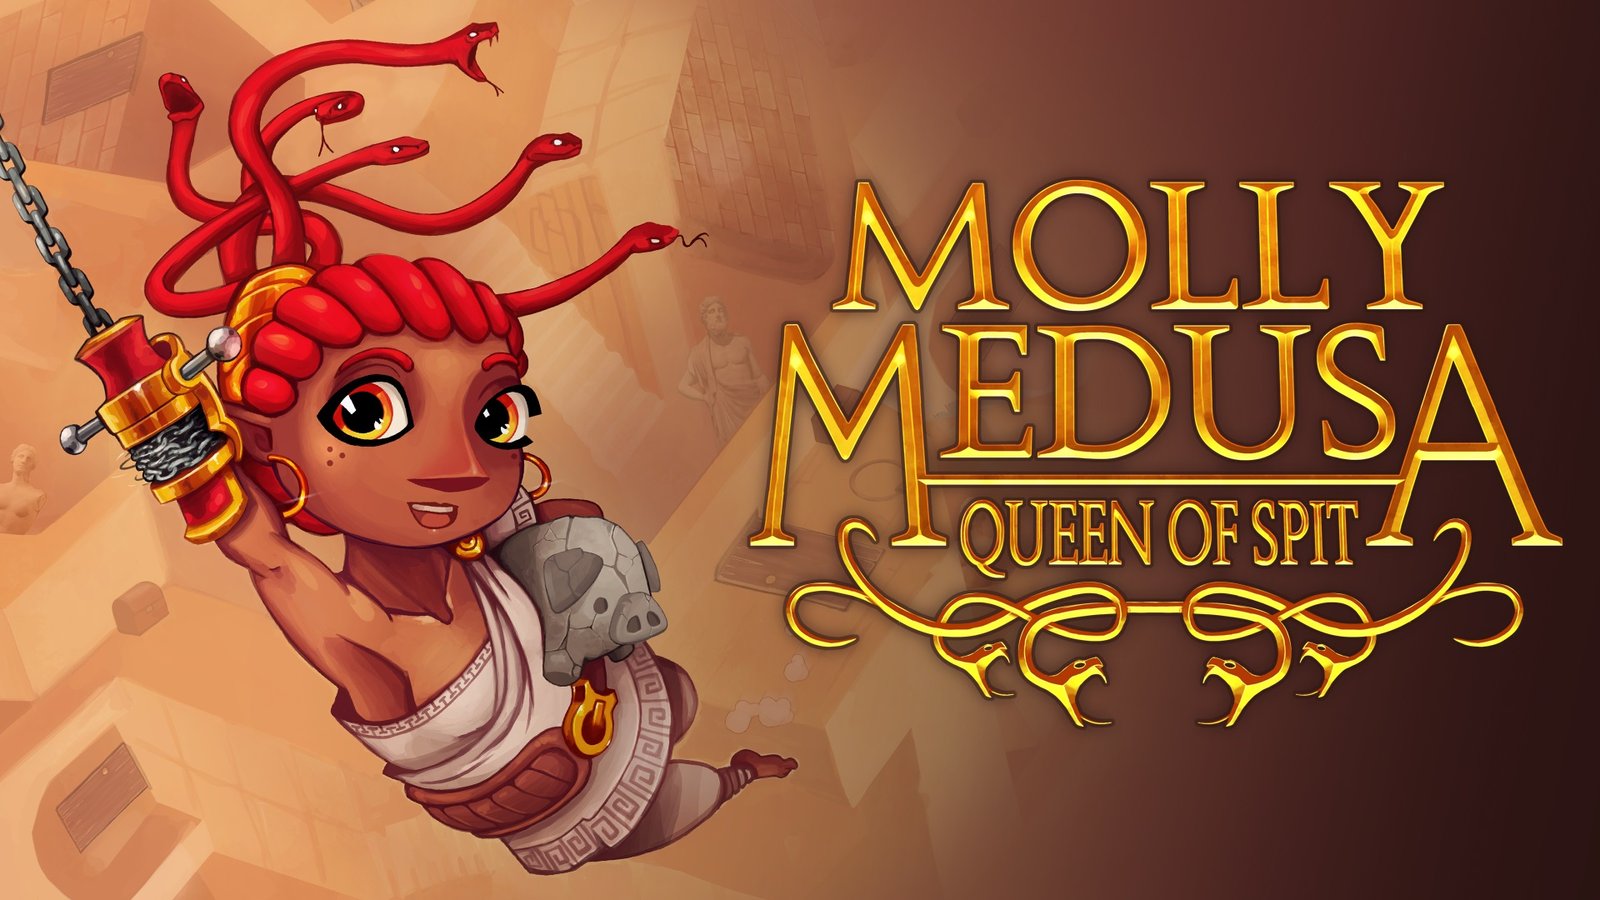 Molly Medusa Release Date